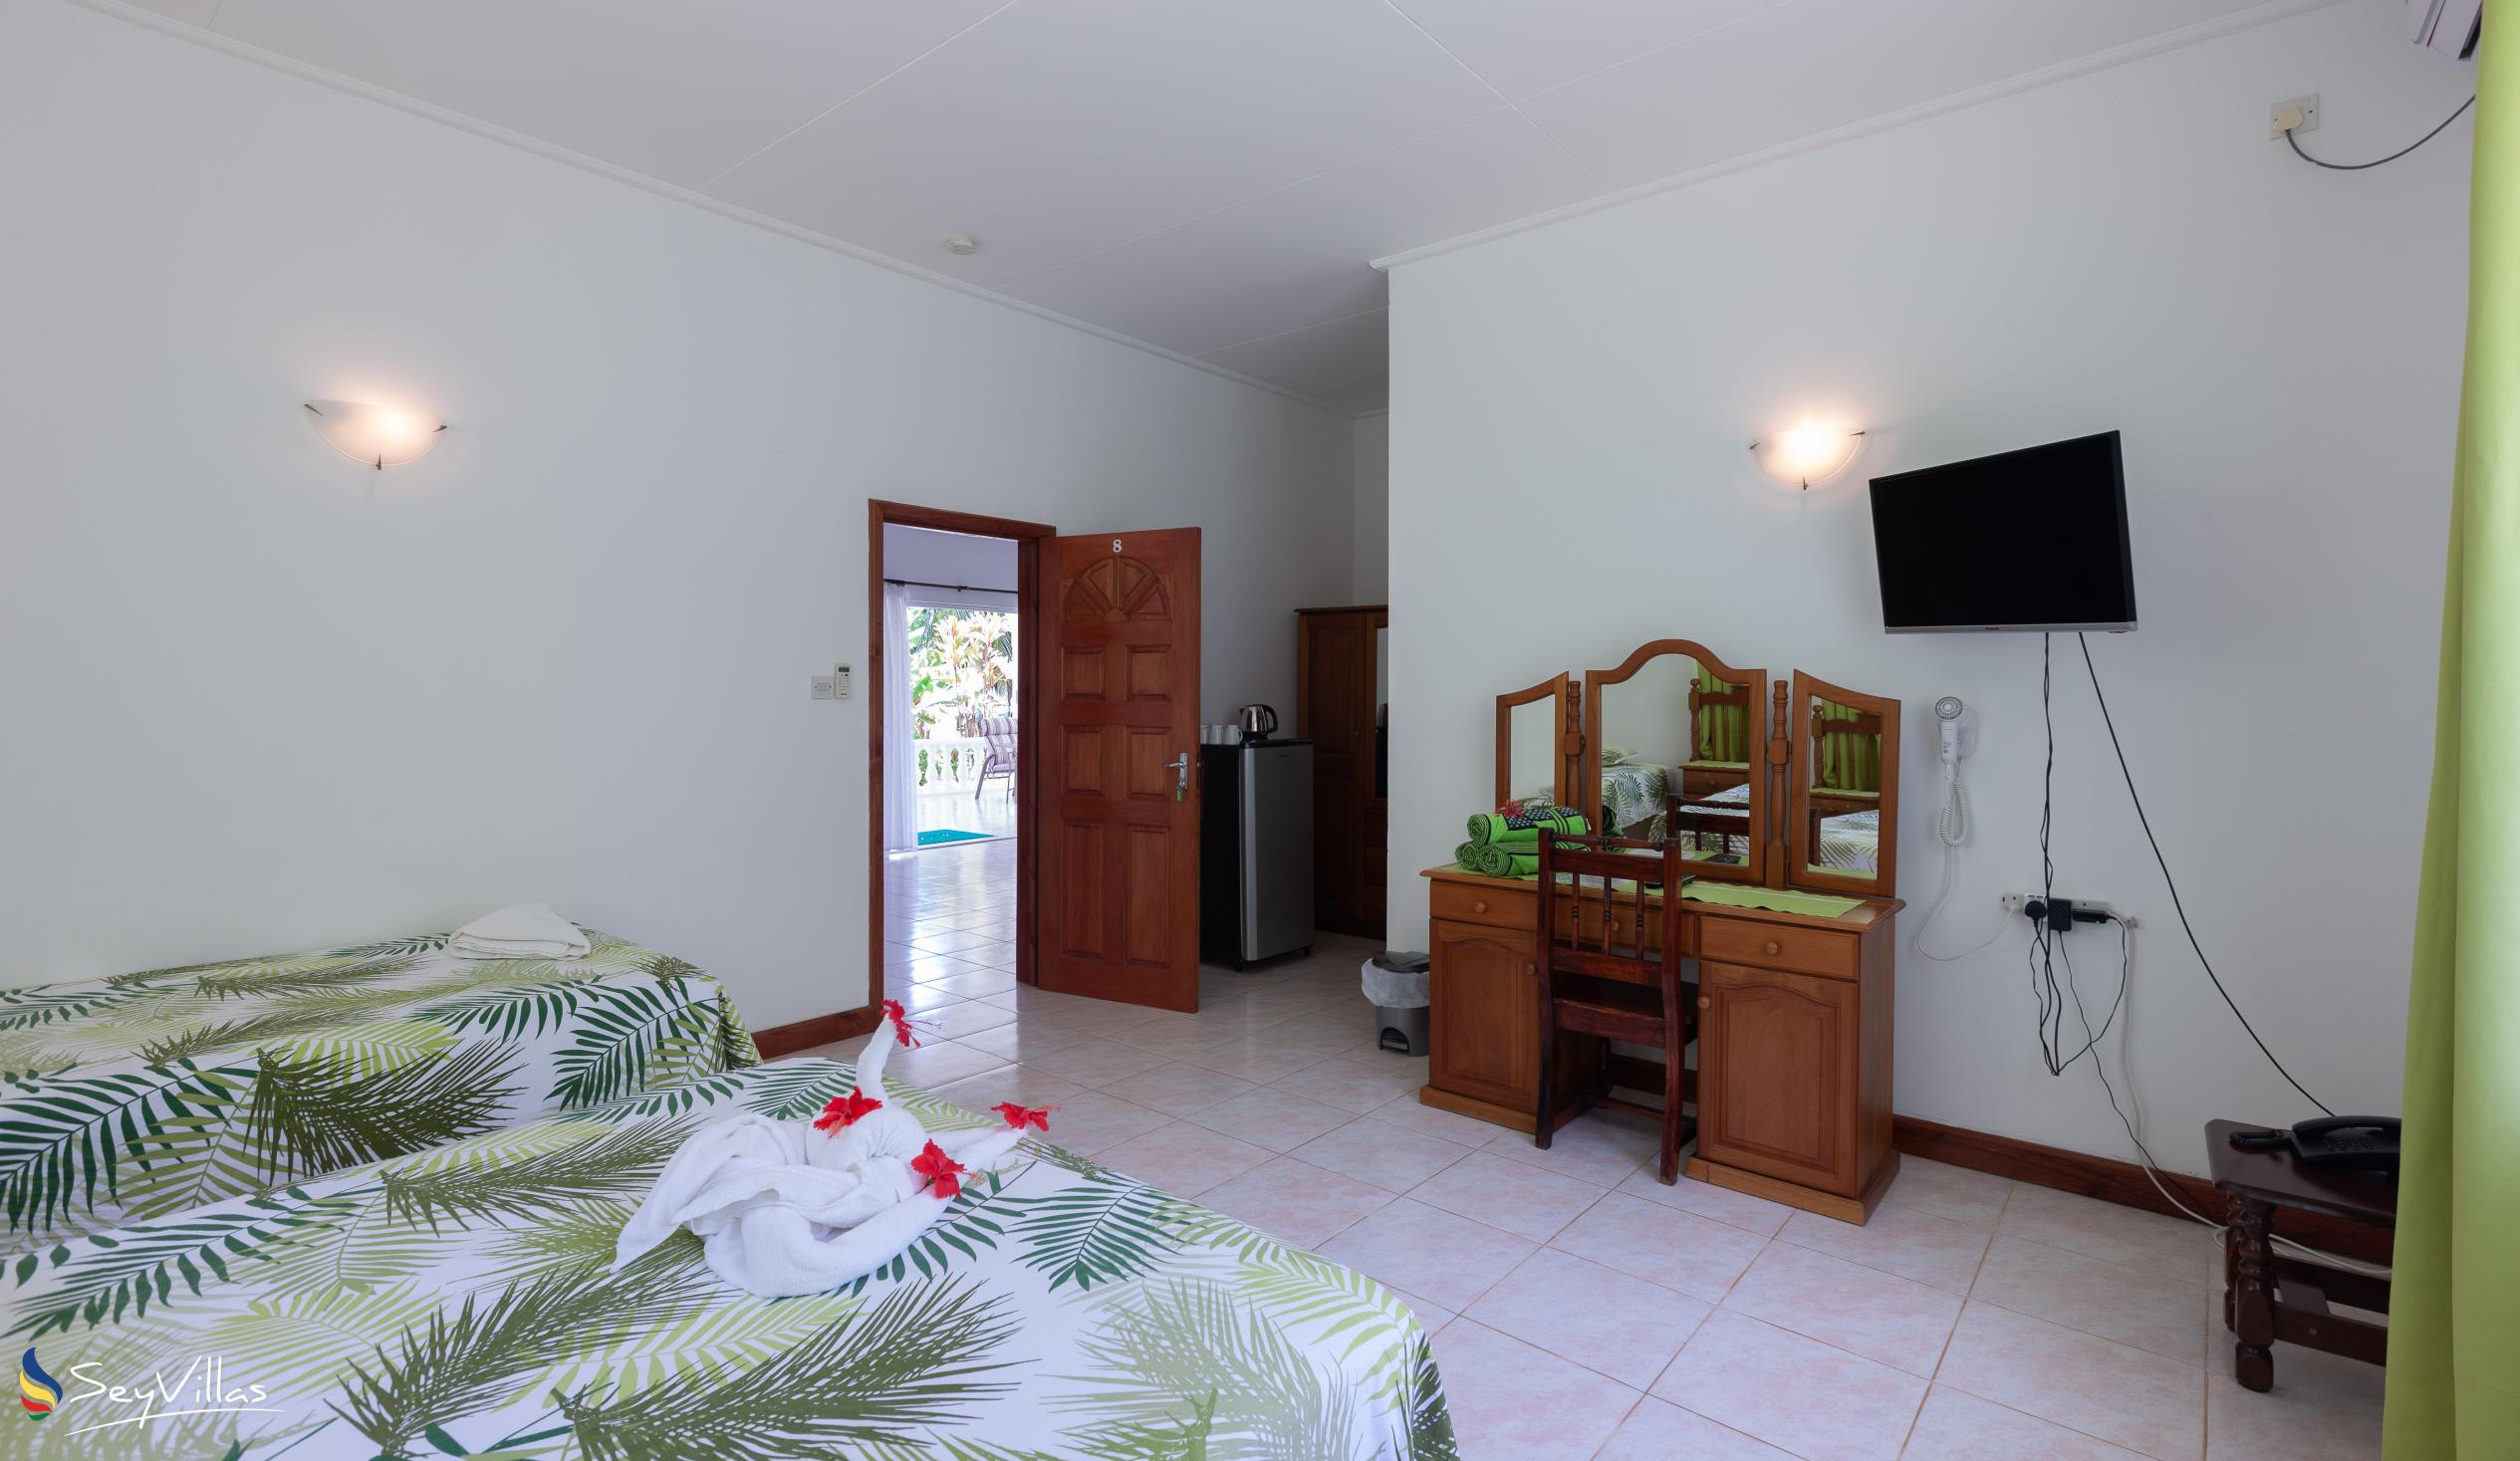 Photo 56: Le Chevalier Bay Guesthouse - Standard Triple Room - Praslin (Seychelles)